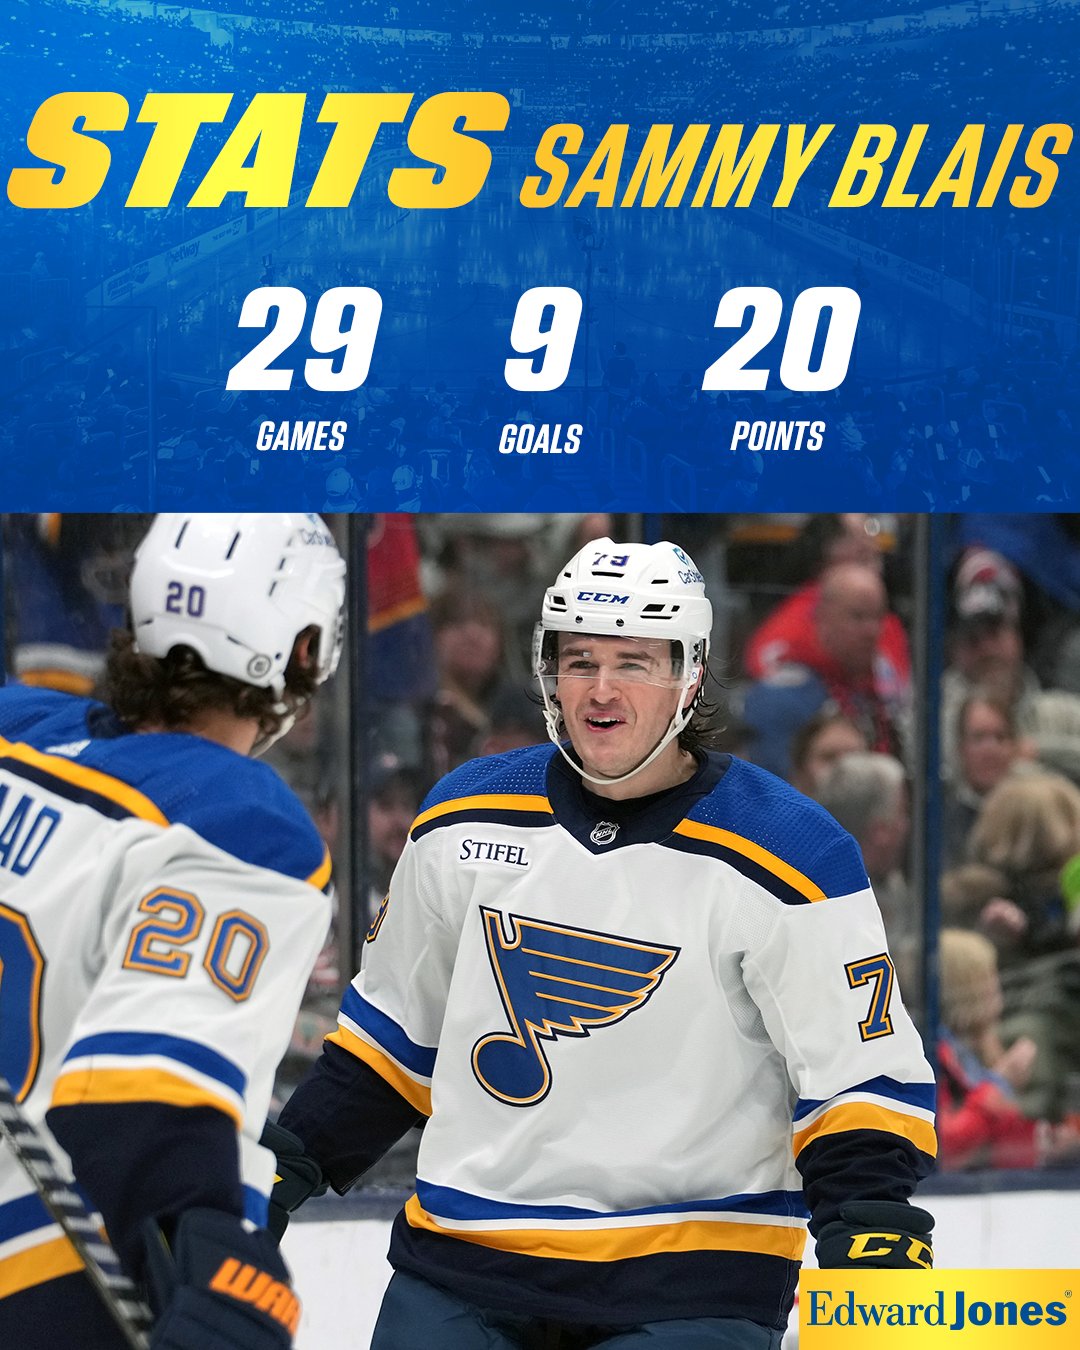 Sammy Blais Hockey Stats and Profile at